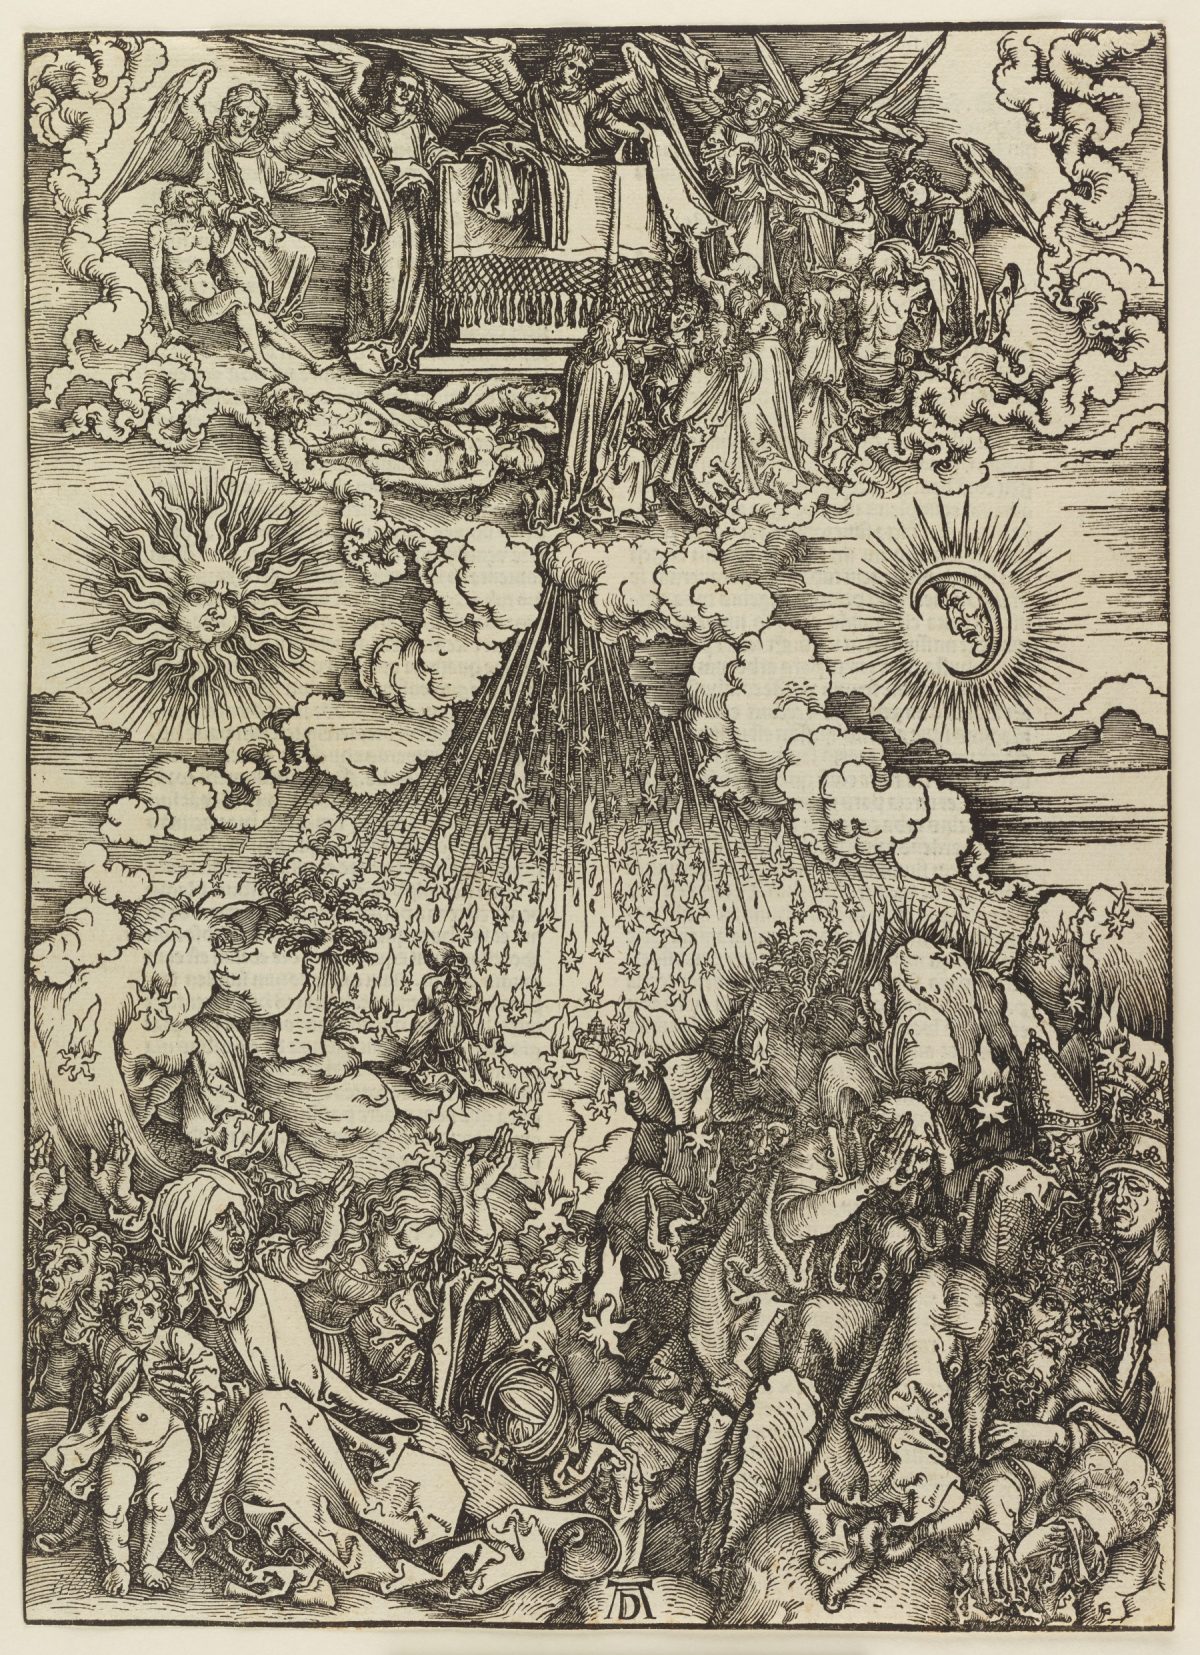 Albrecht Dürer, art, woodcuts, Apocalypse, religion, Bible